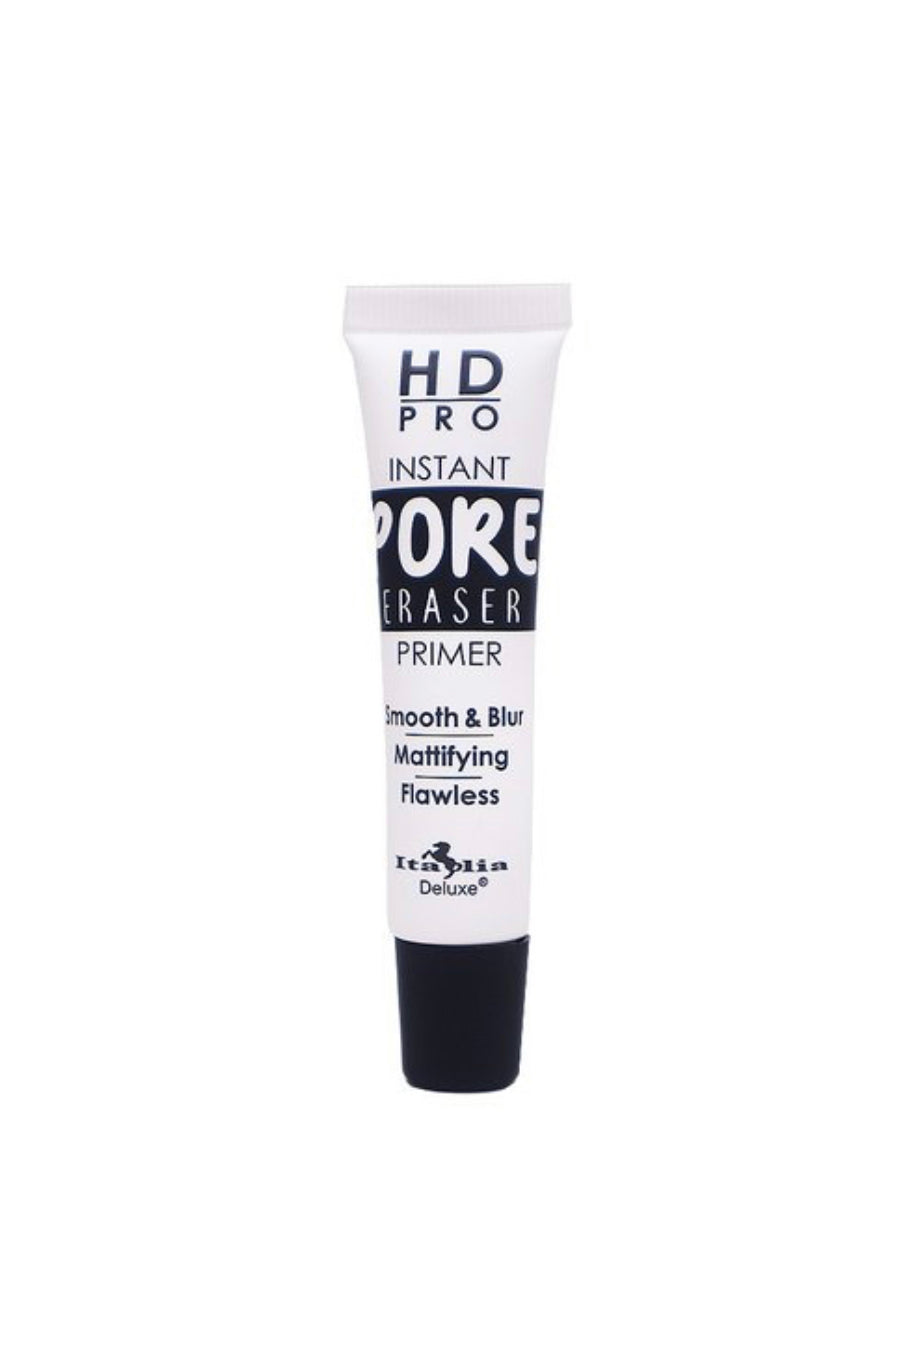 HD Pro Pore Eraser Primer